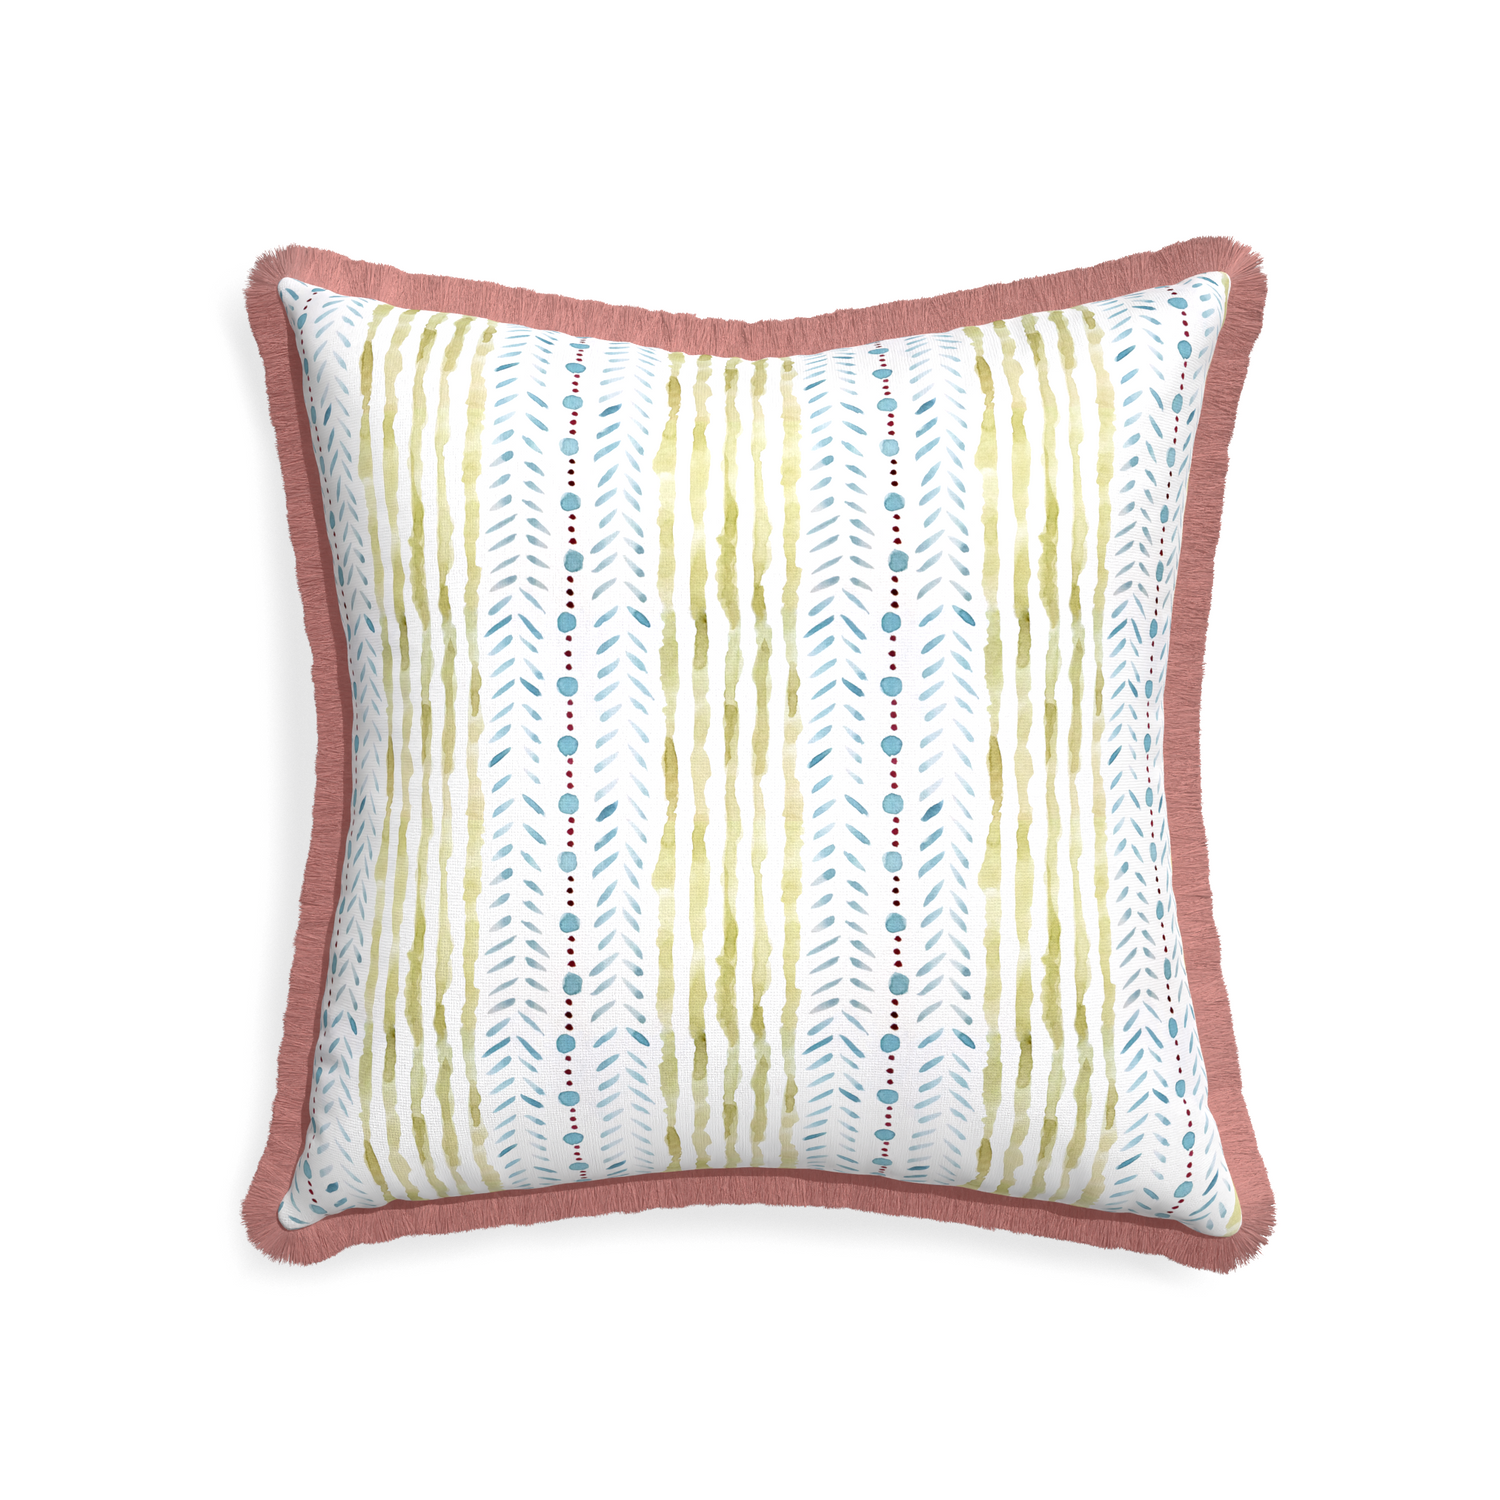 22-square julia custom pillow with d fringe on white background